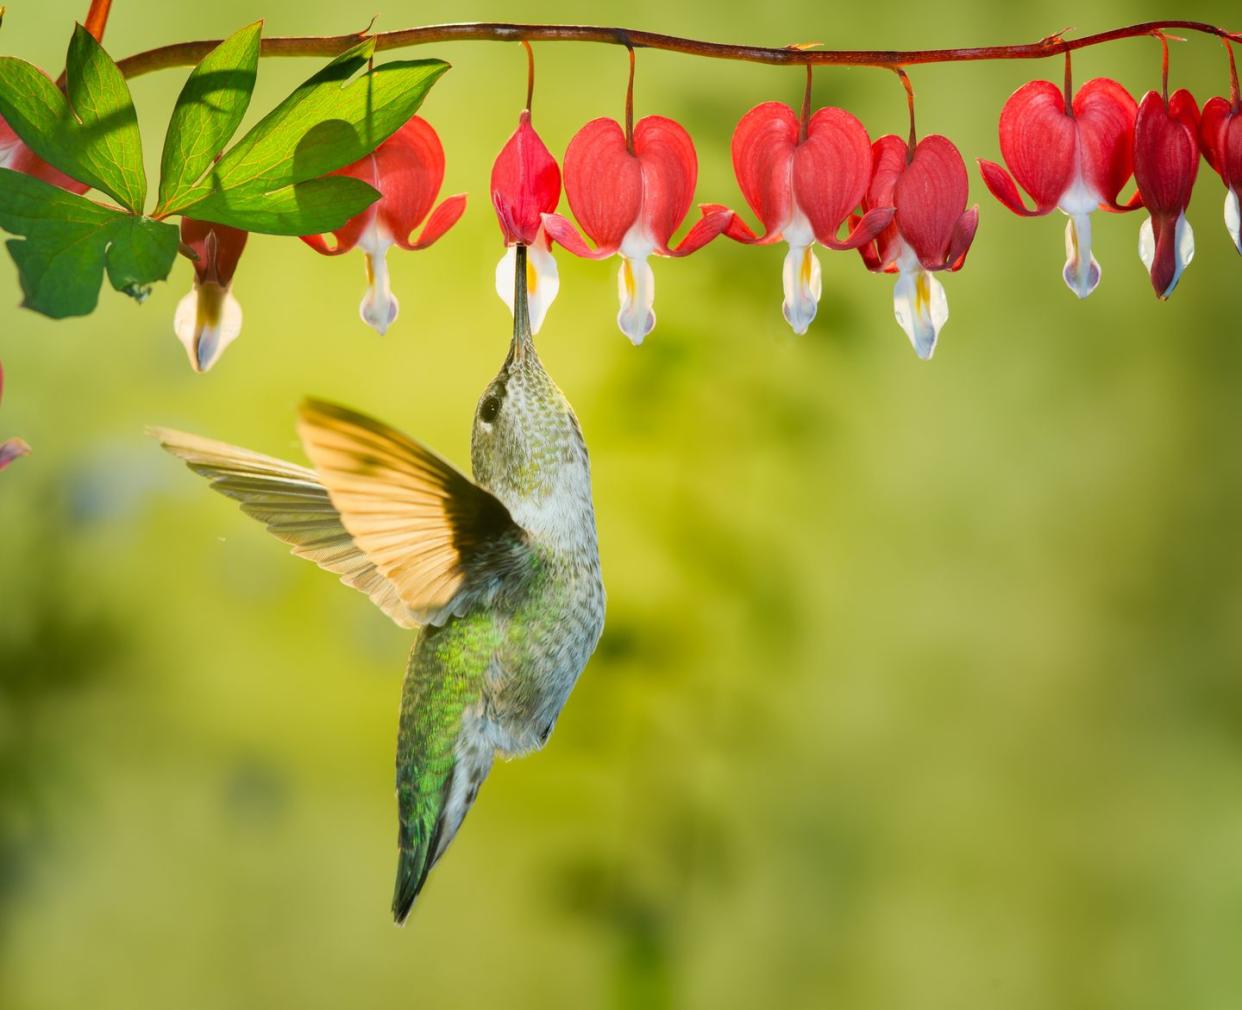 flowers that attract hummingbirds like bleeding hearts